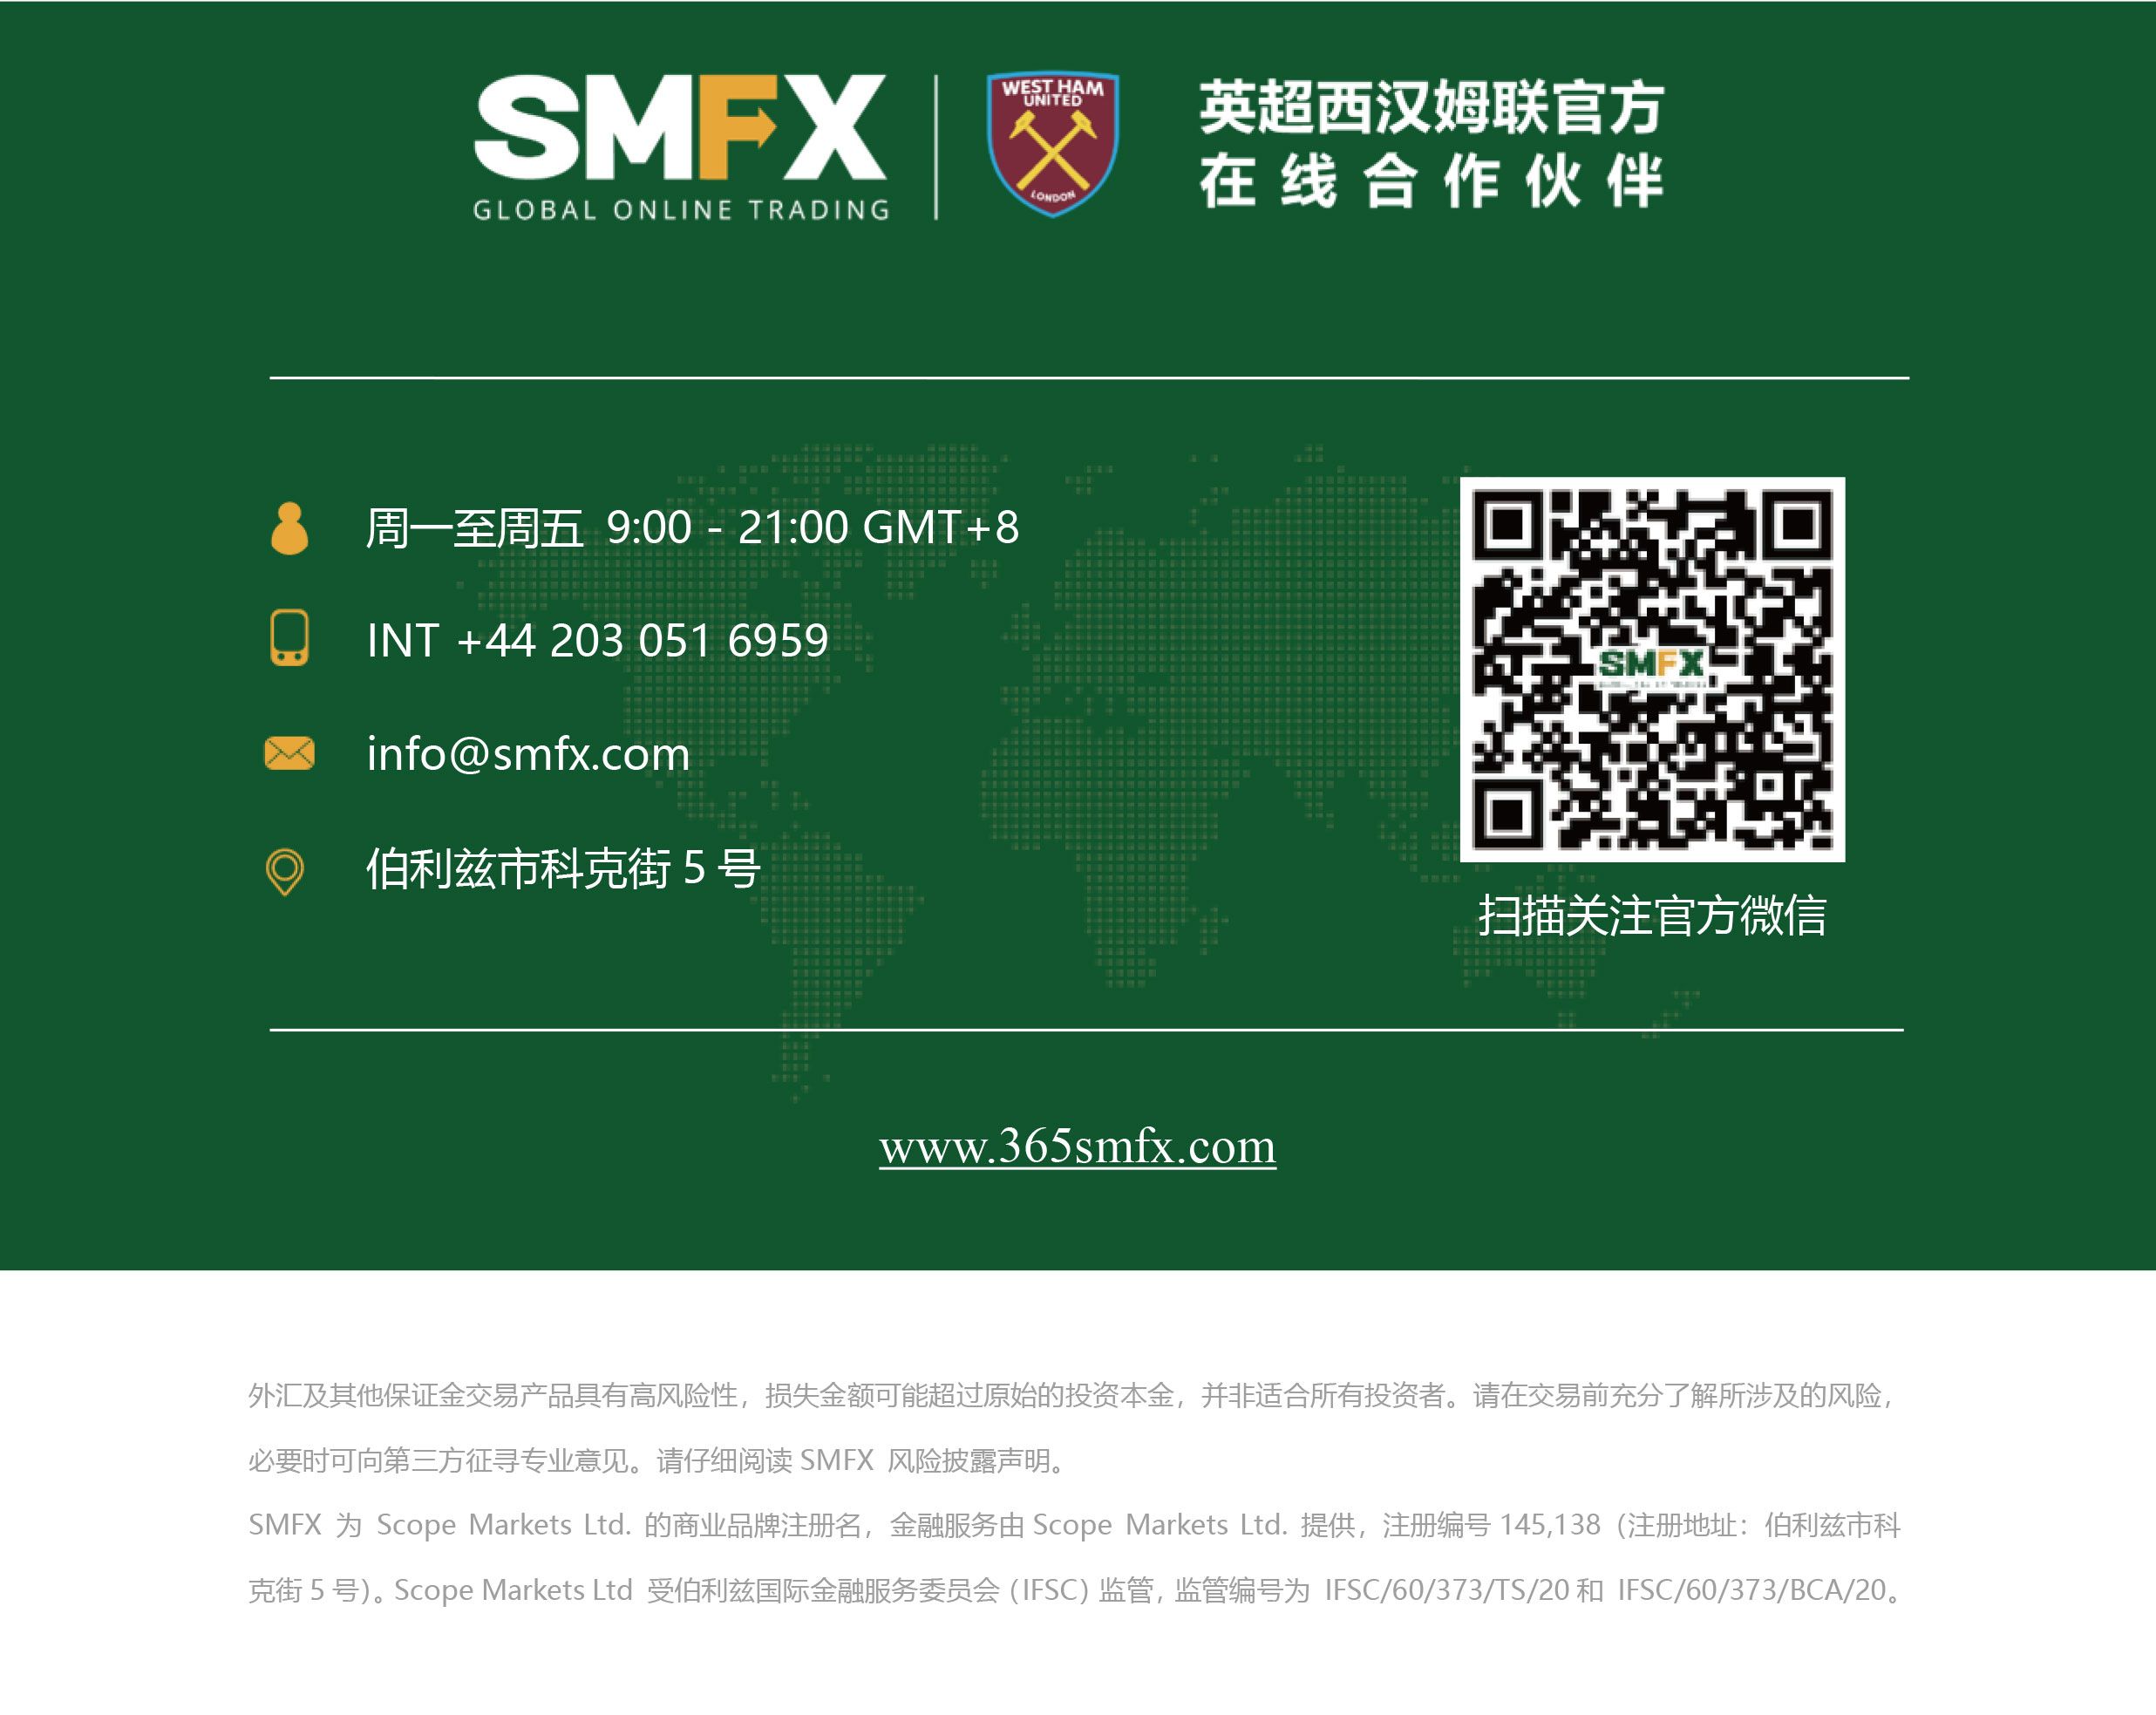 SMFX【策略研究报告】丨2020.09.25